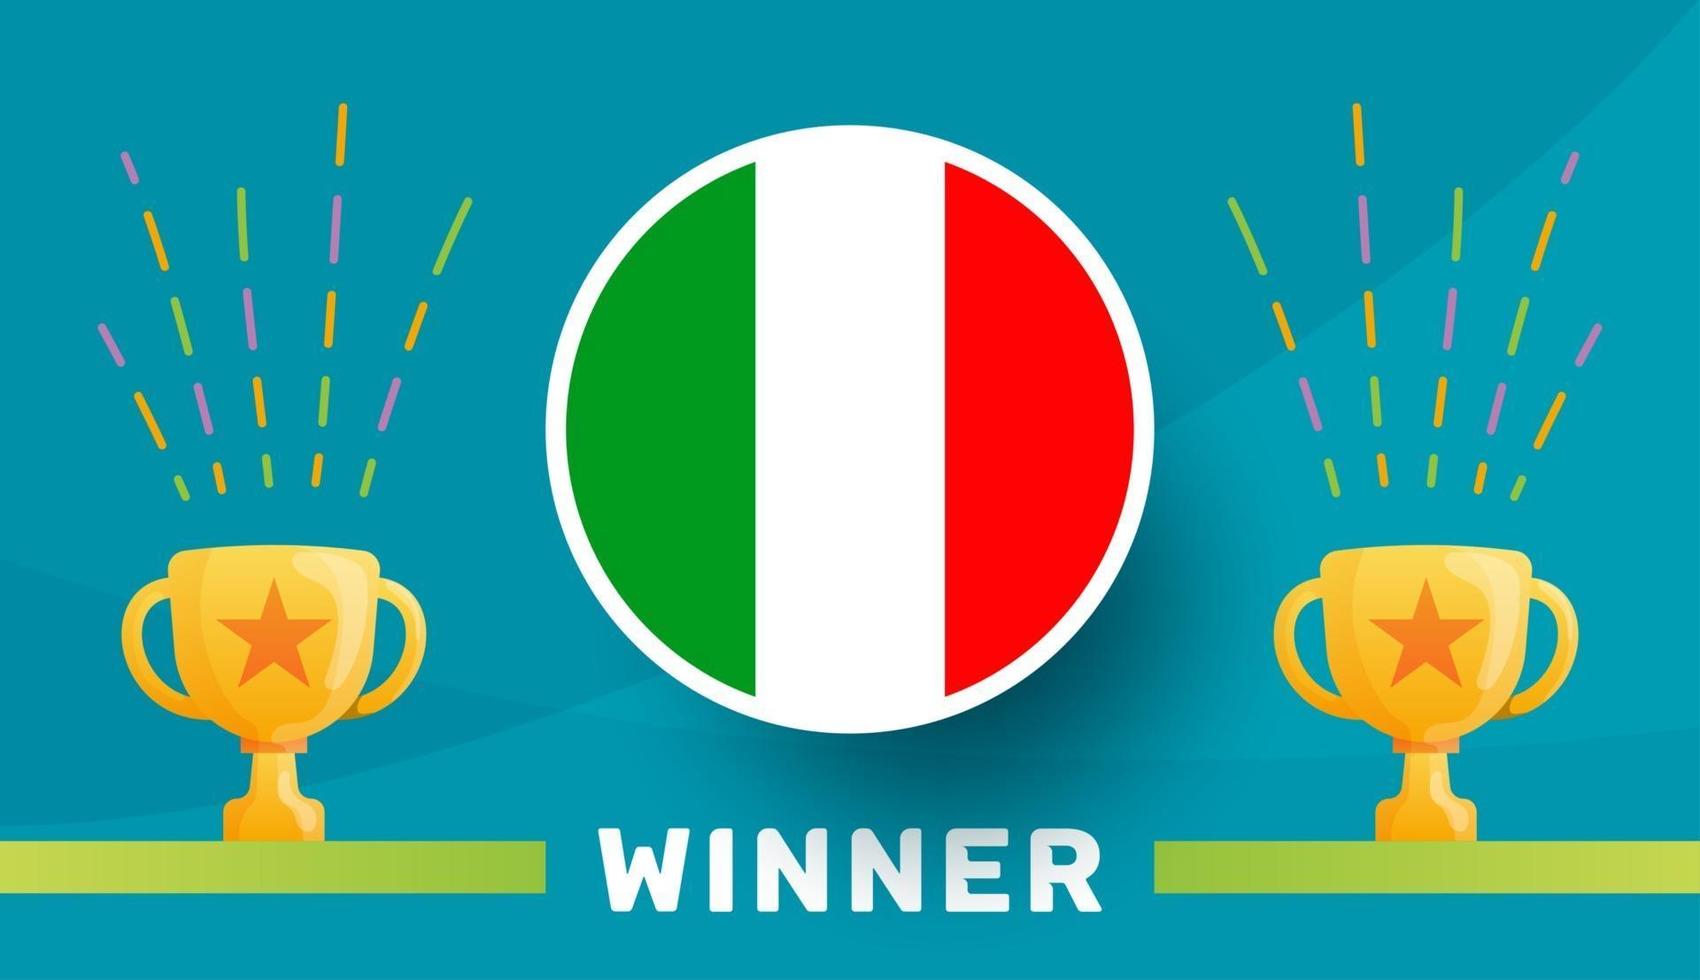 Italien-Gewinner-Vektor-Illustration Fußball-Meisterschaft 2020 vektor